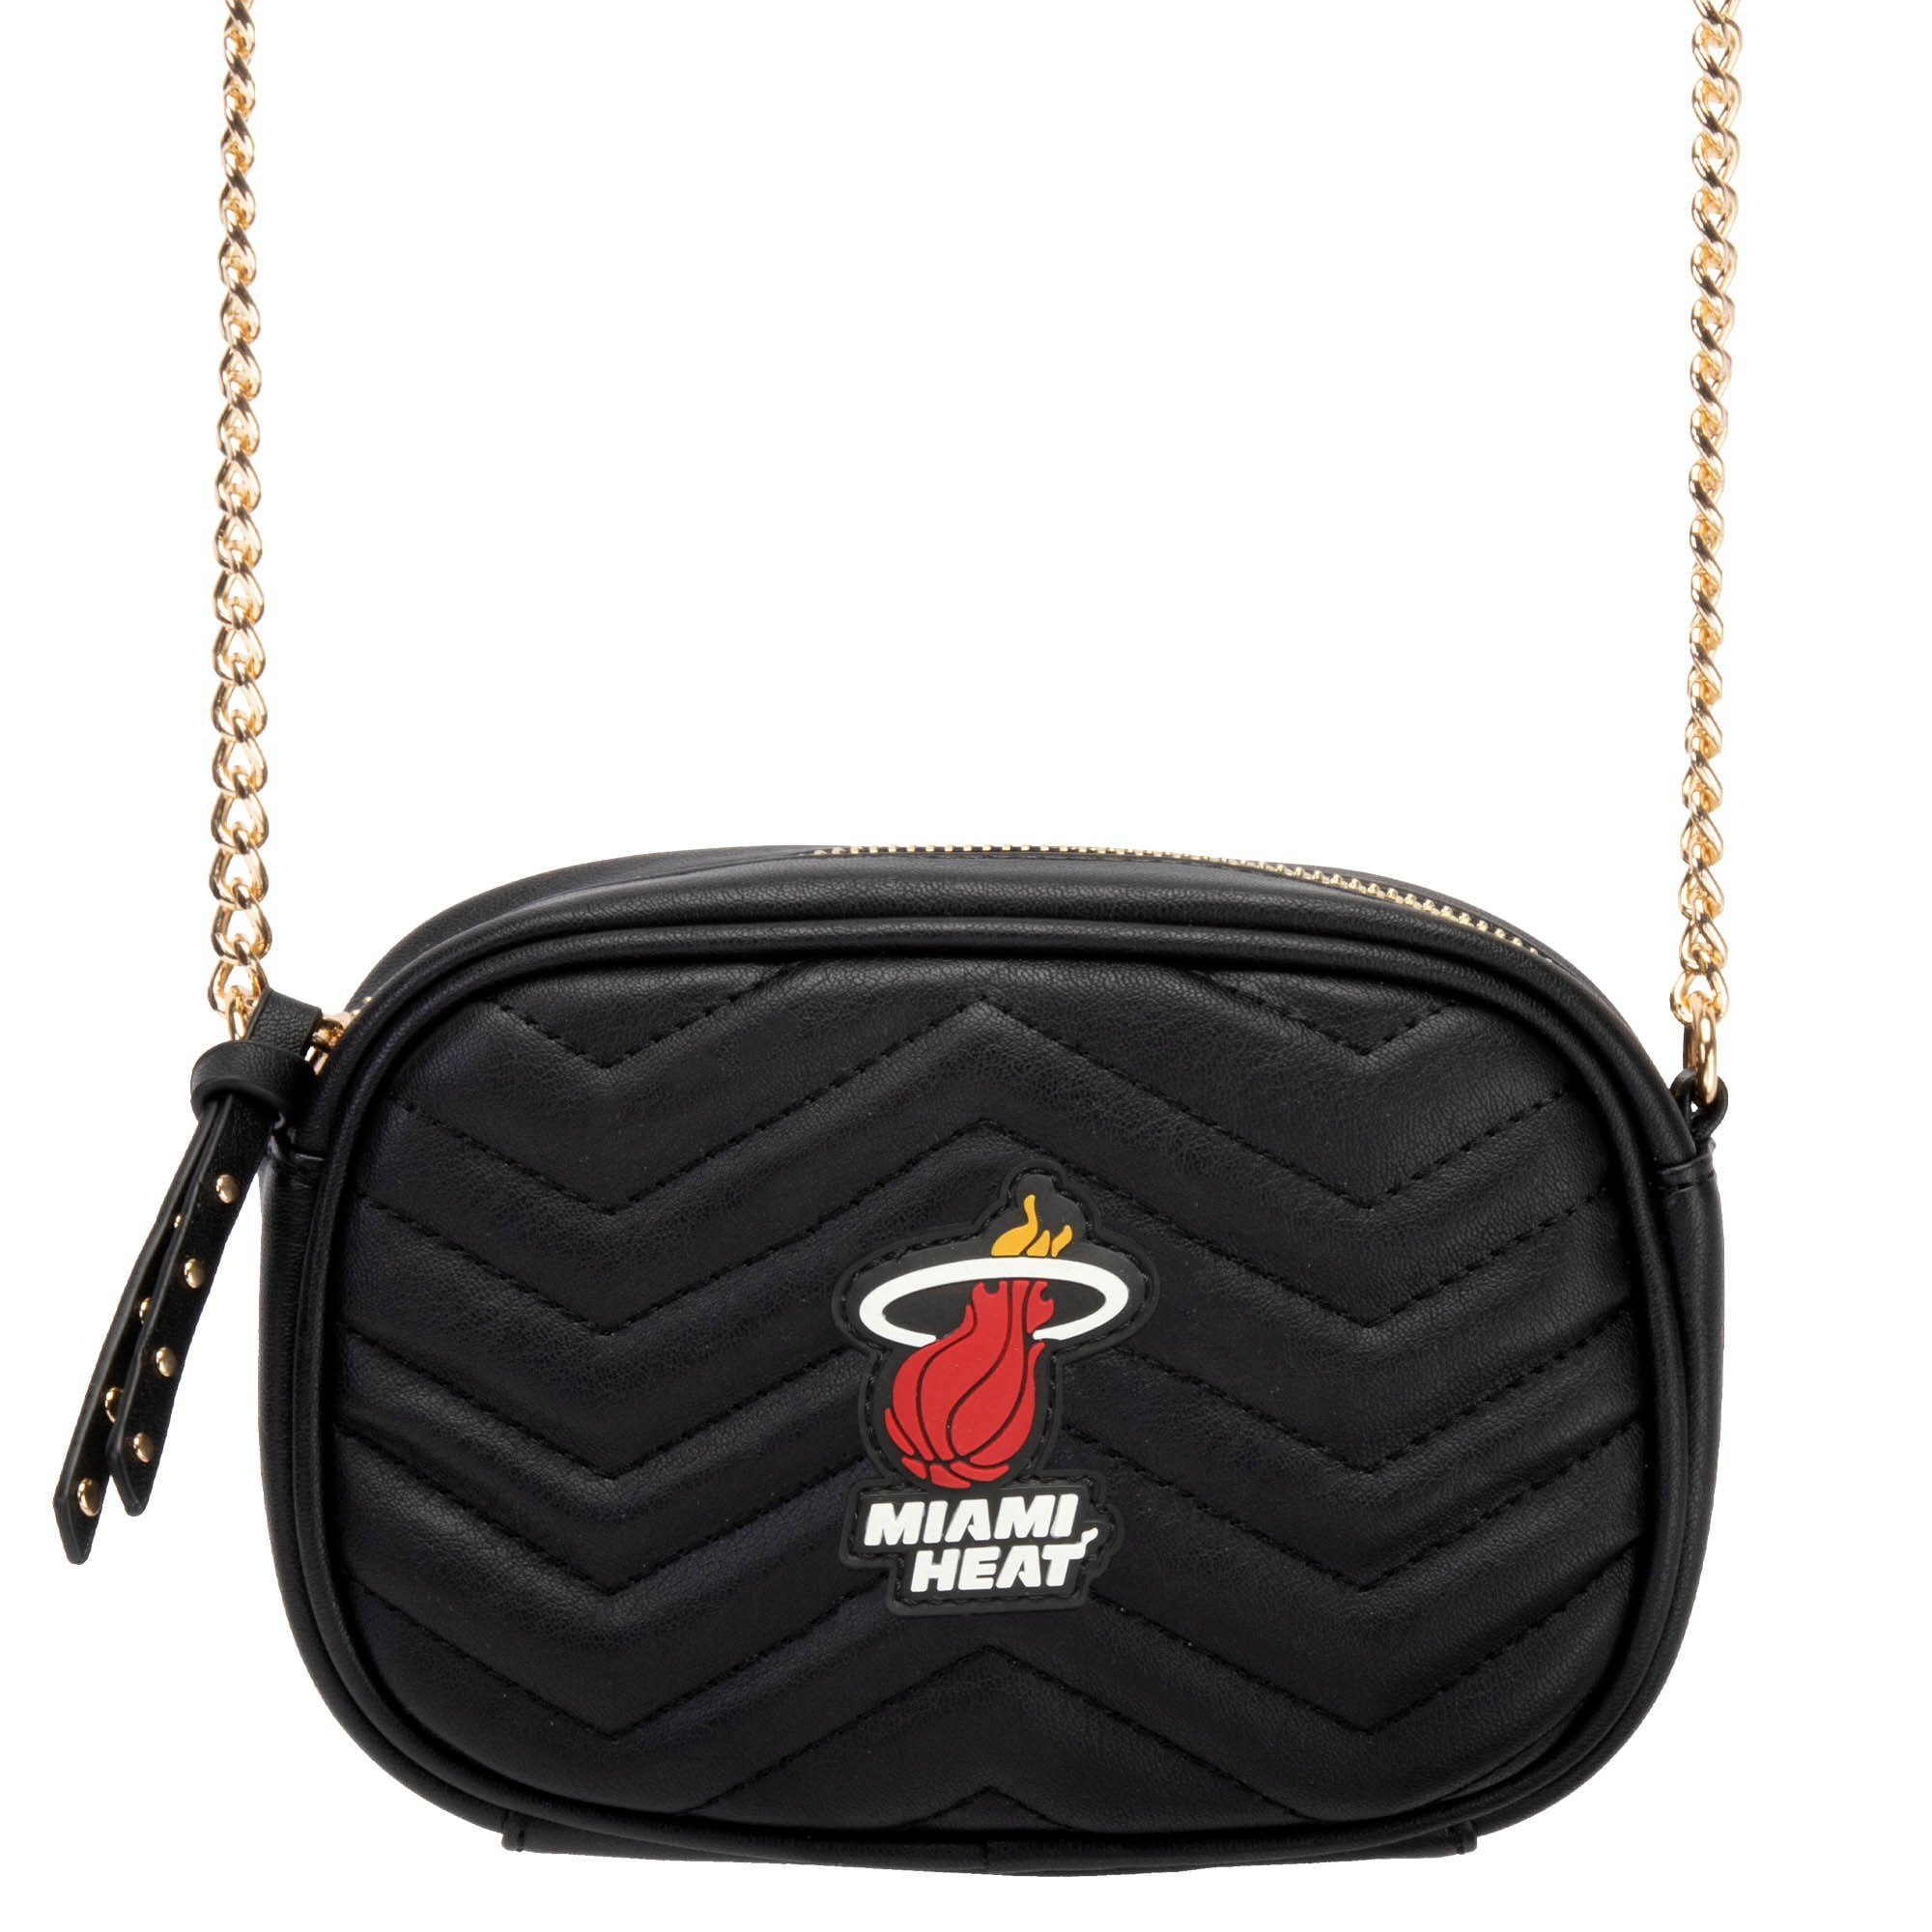 FISLL Miami Heat Duffle Bag in Black